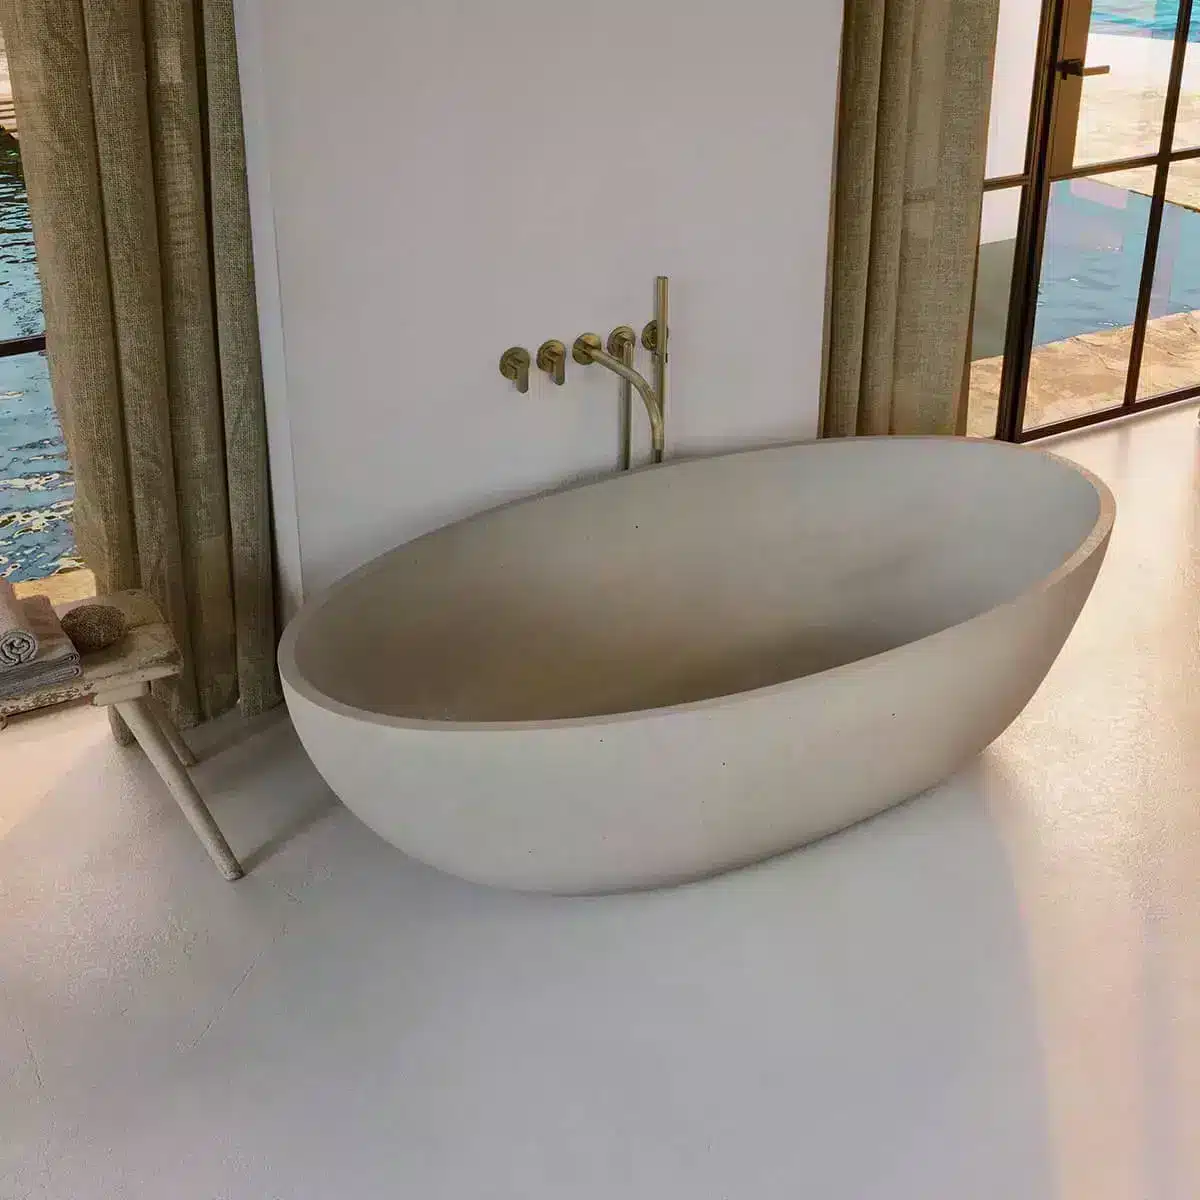  Natural stone bathtub